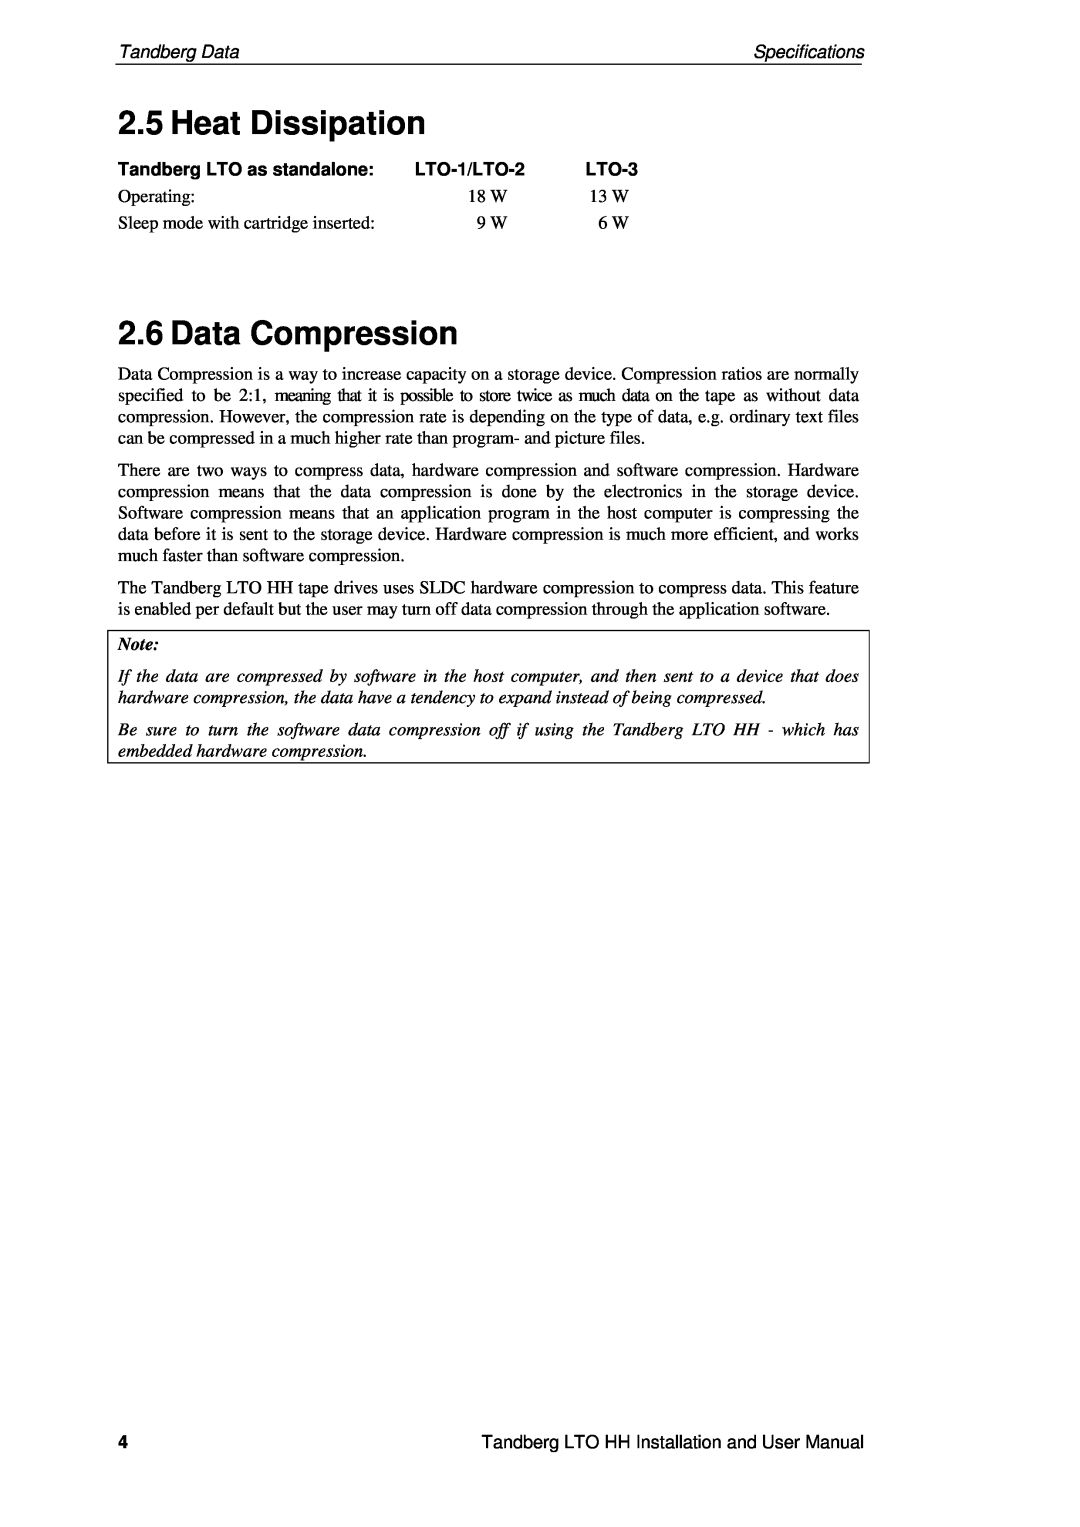 Tandberg Data LTO-1 HH Heat Dissipation, Data Compression, Tandberg DataSpecifications, Tandberg LTO as standalone, LTO-3 